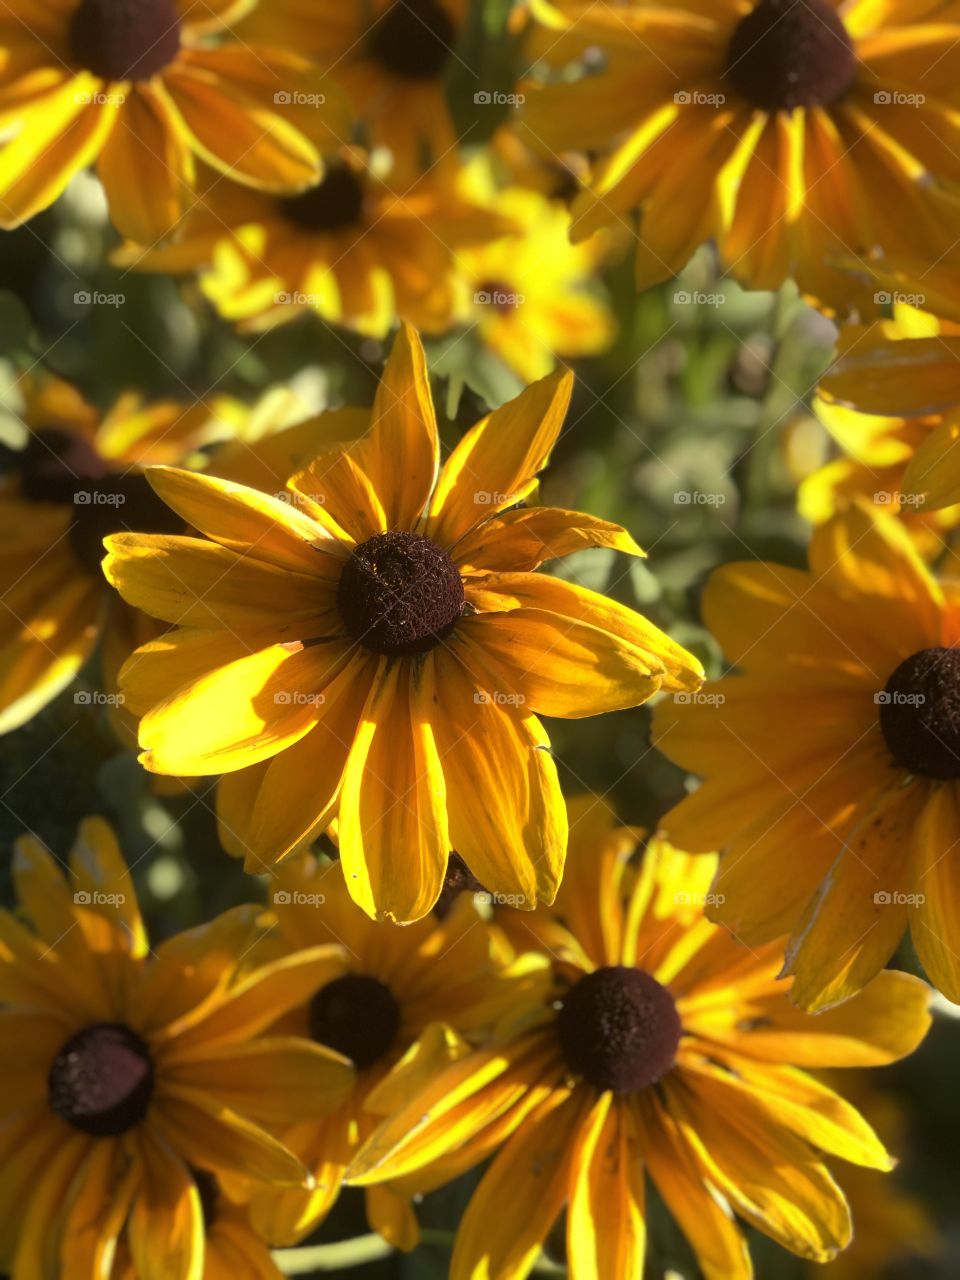 Sunflowers and sunshine. 